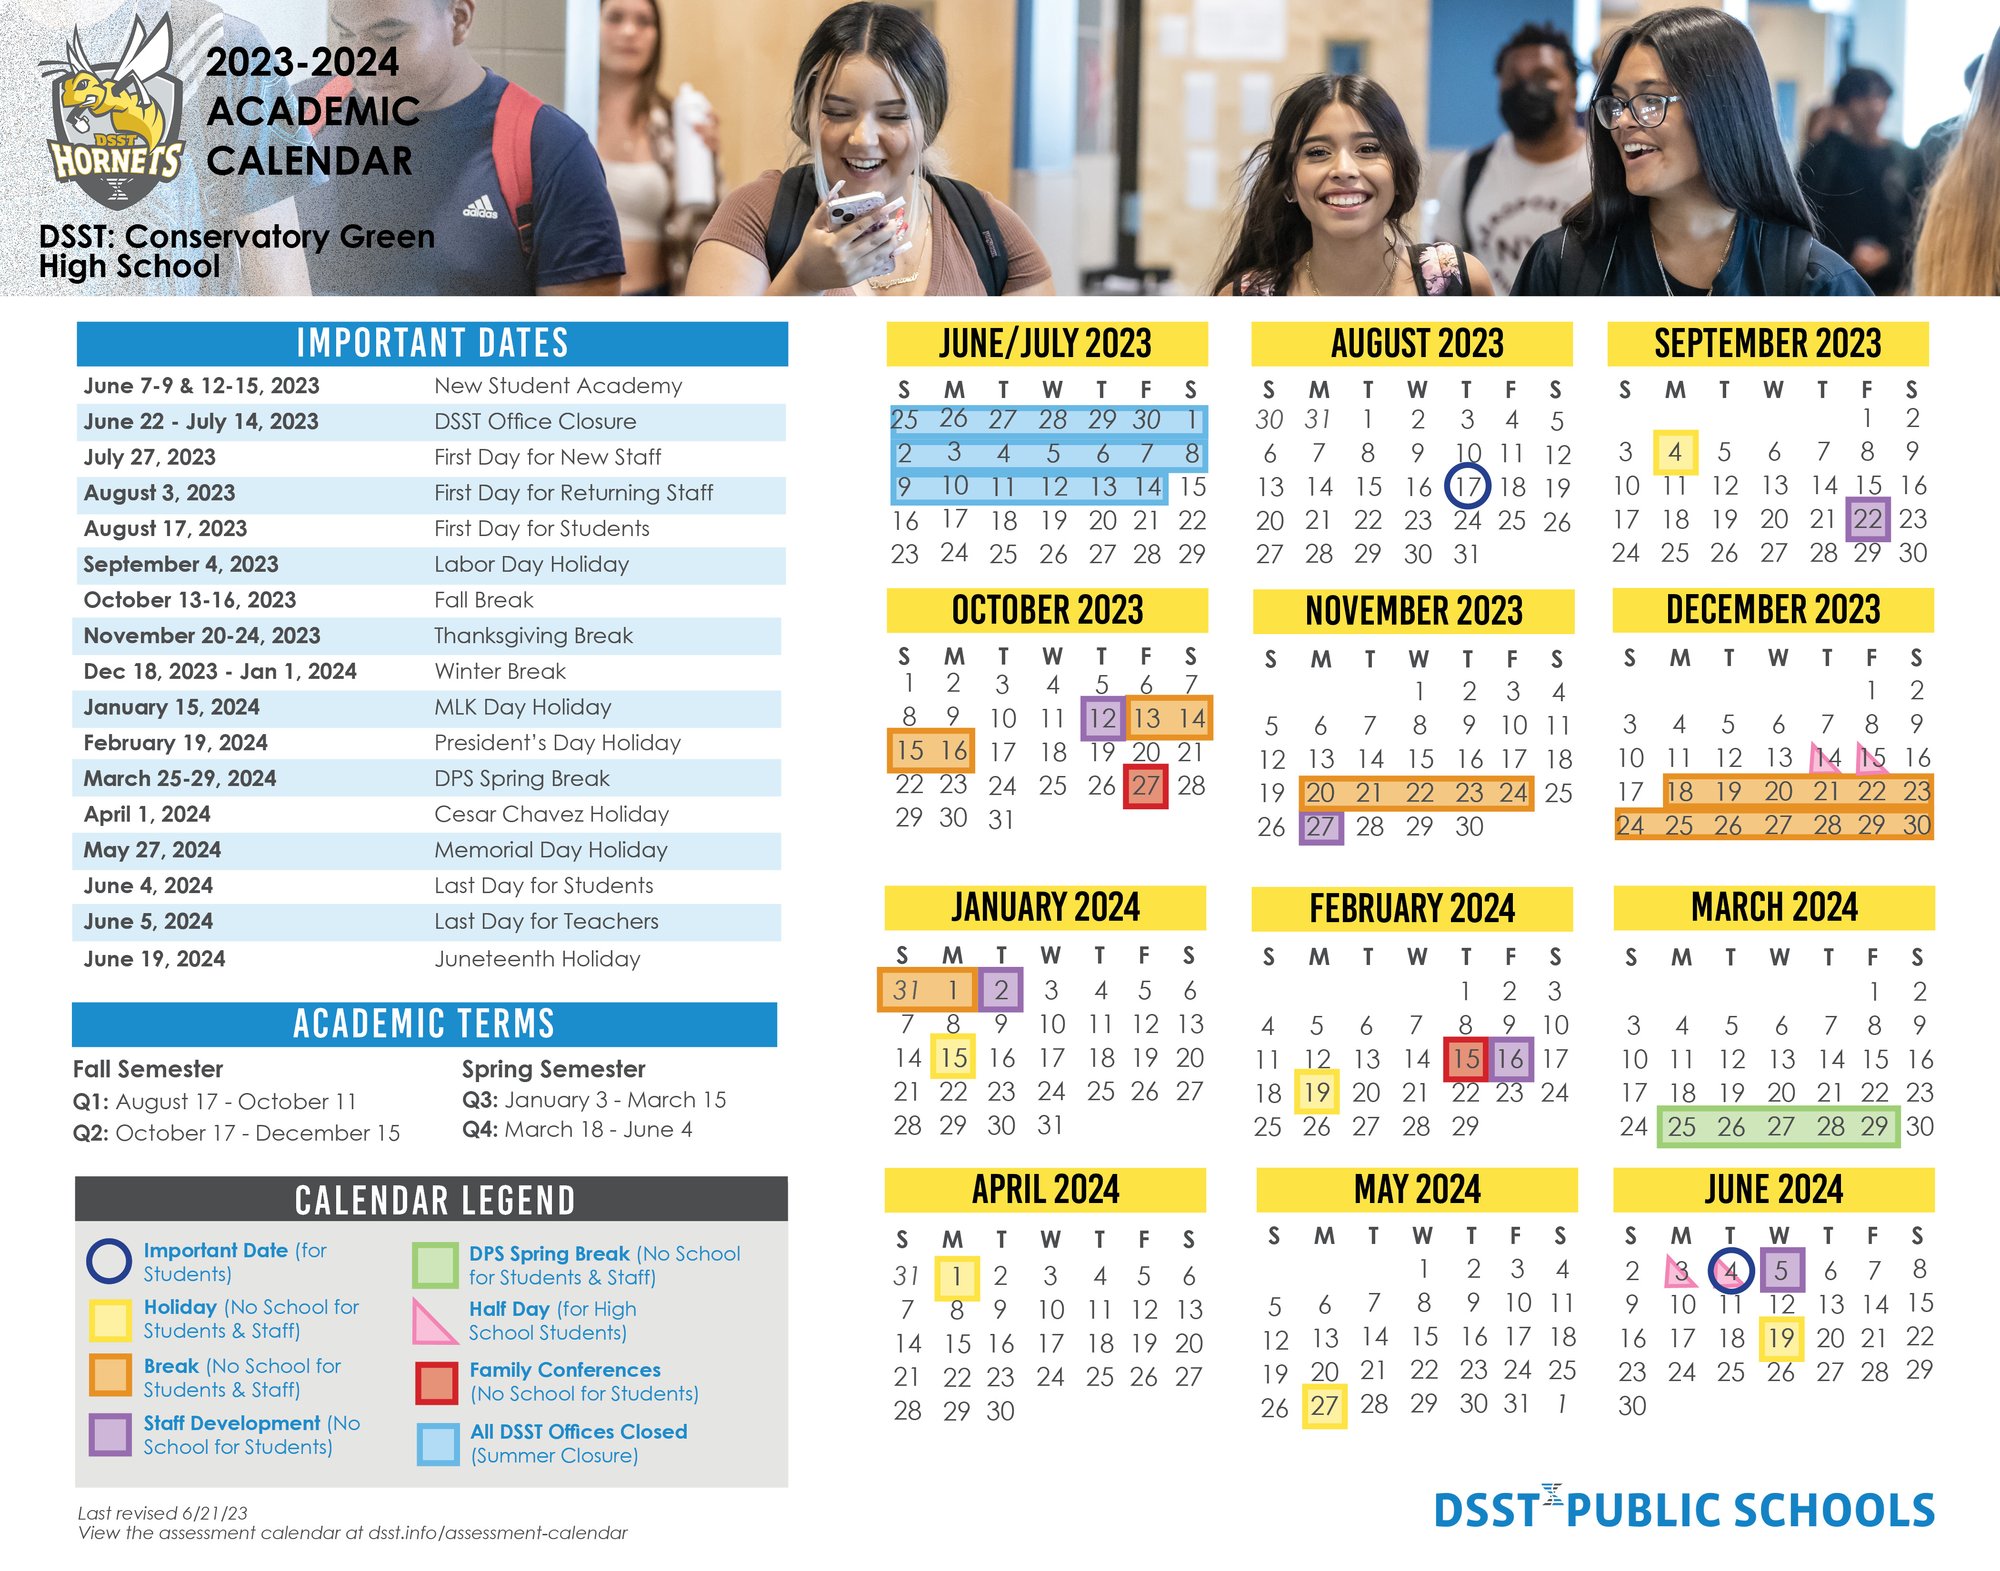 CGHS Calendar 23-24 English and Spanish 6.21.23